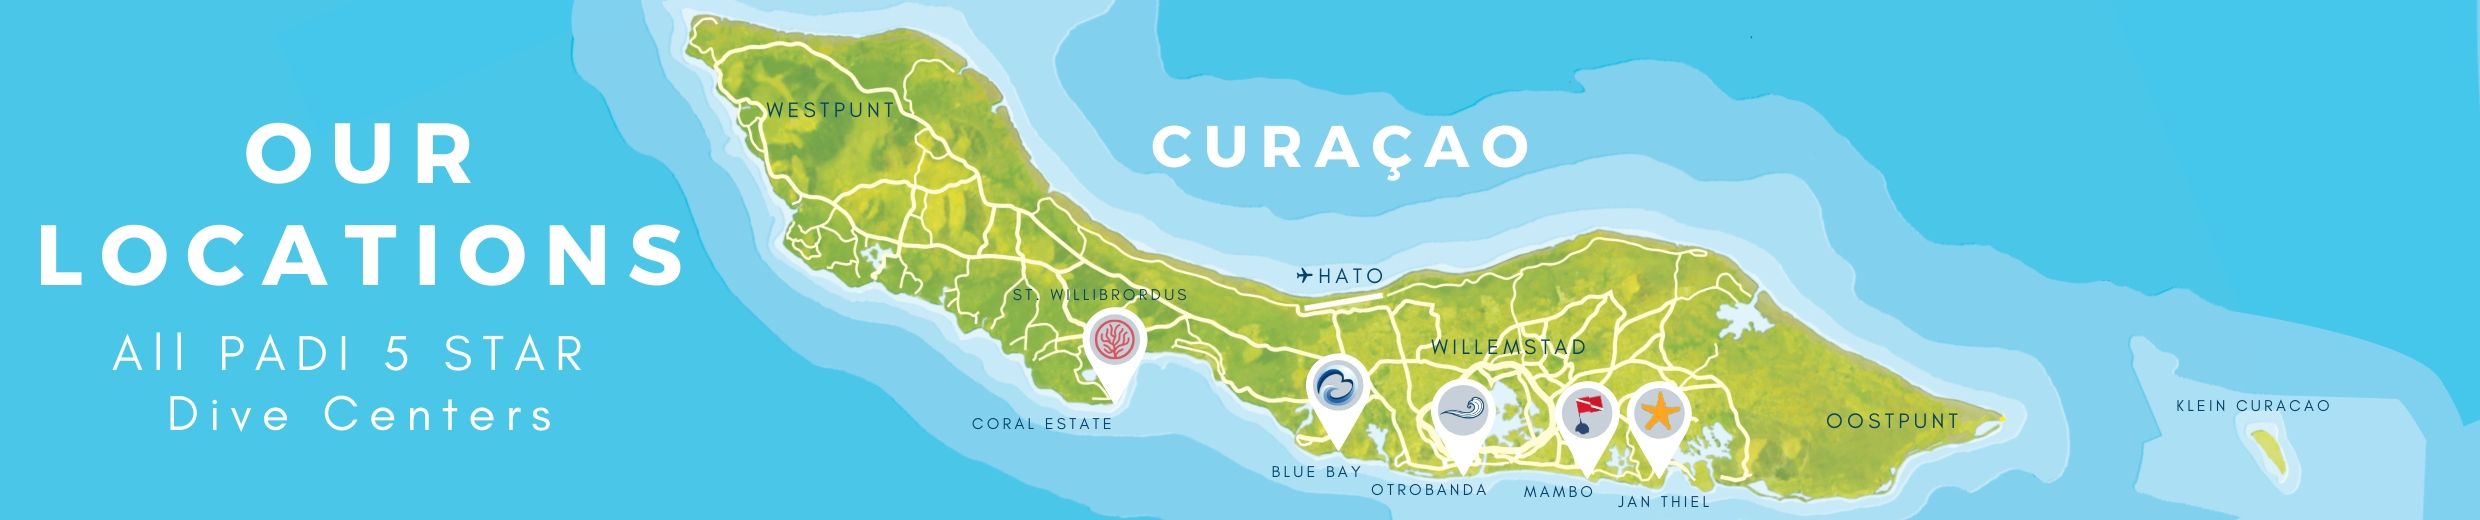 curacao island